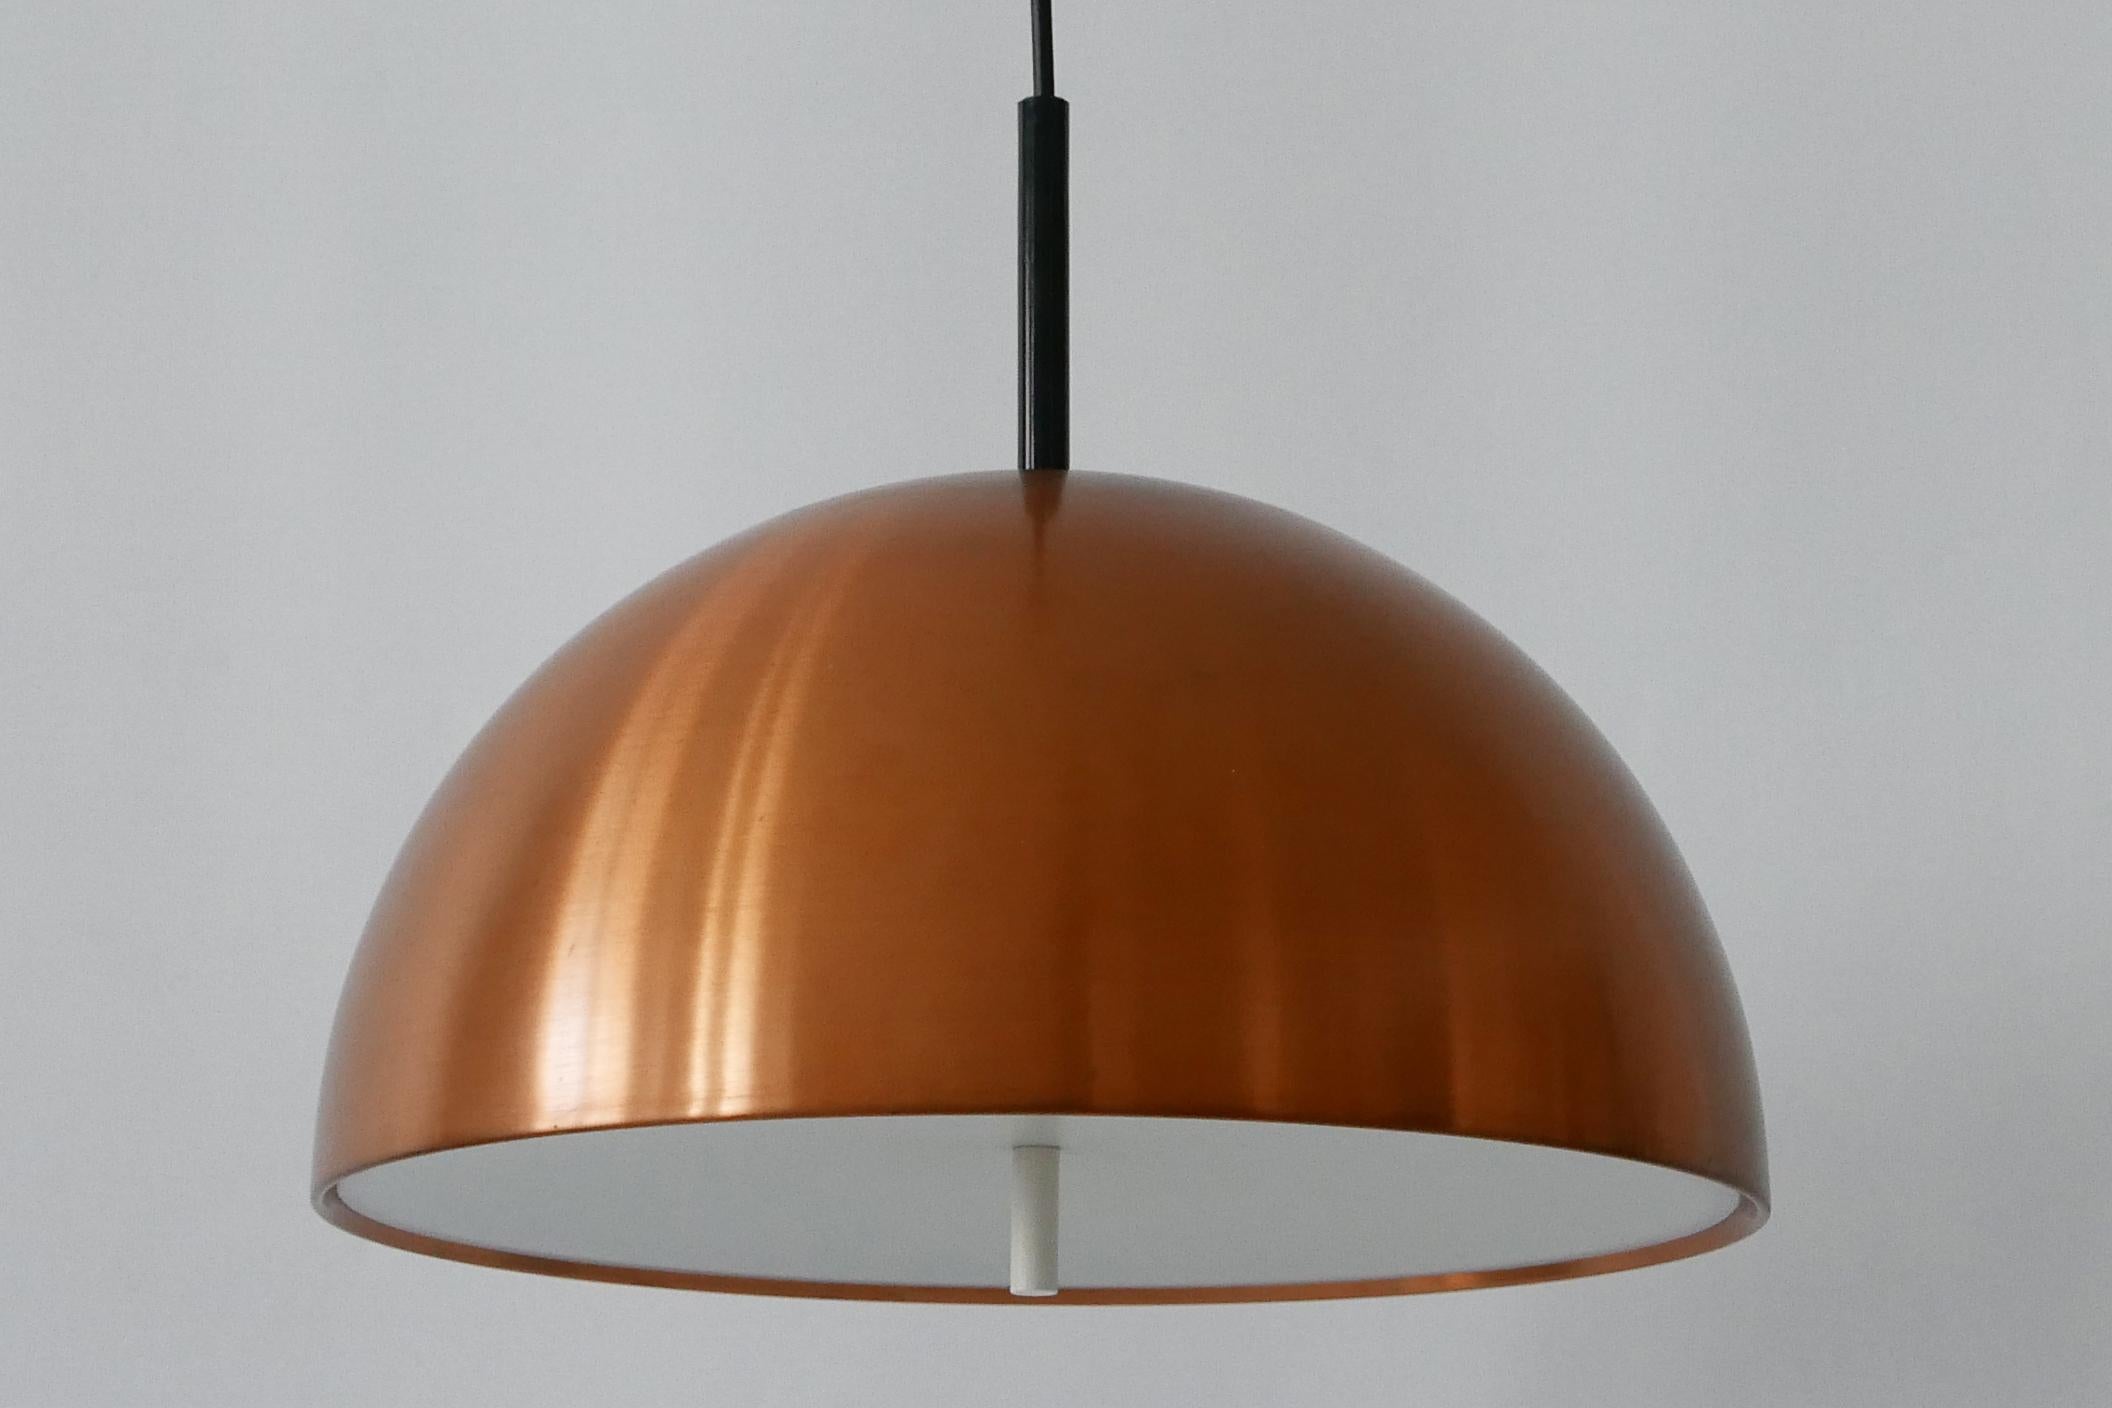 Elegant Mid-Century Modern Copper Pendant Lamp by Staff & Schwarz 1960s, Germany For Sale 6